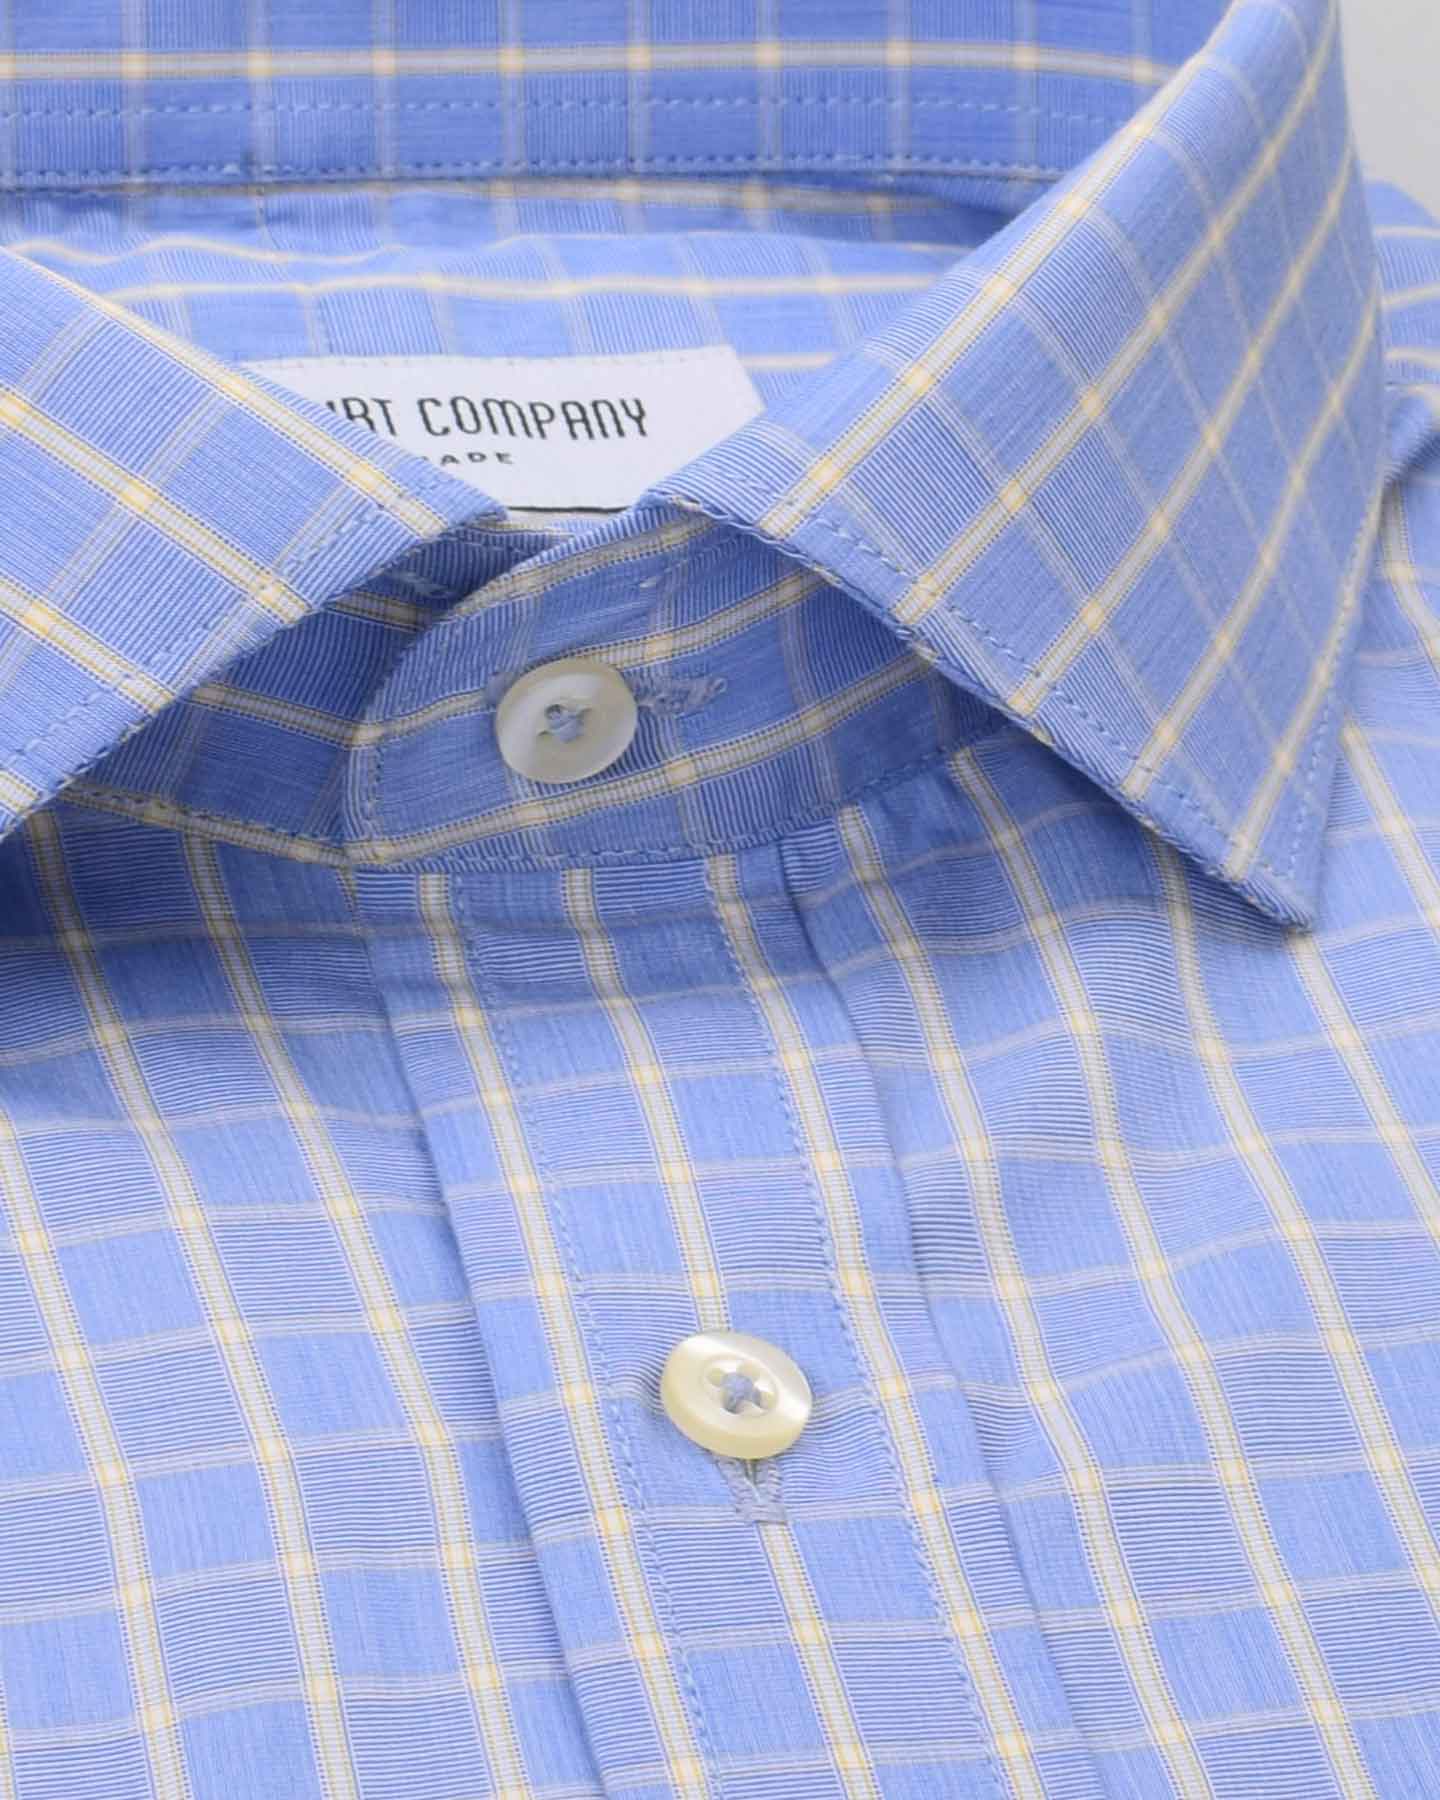 Bombay Shirt Company - Wrinkle Resistant Lemon Checks Shirt